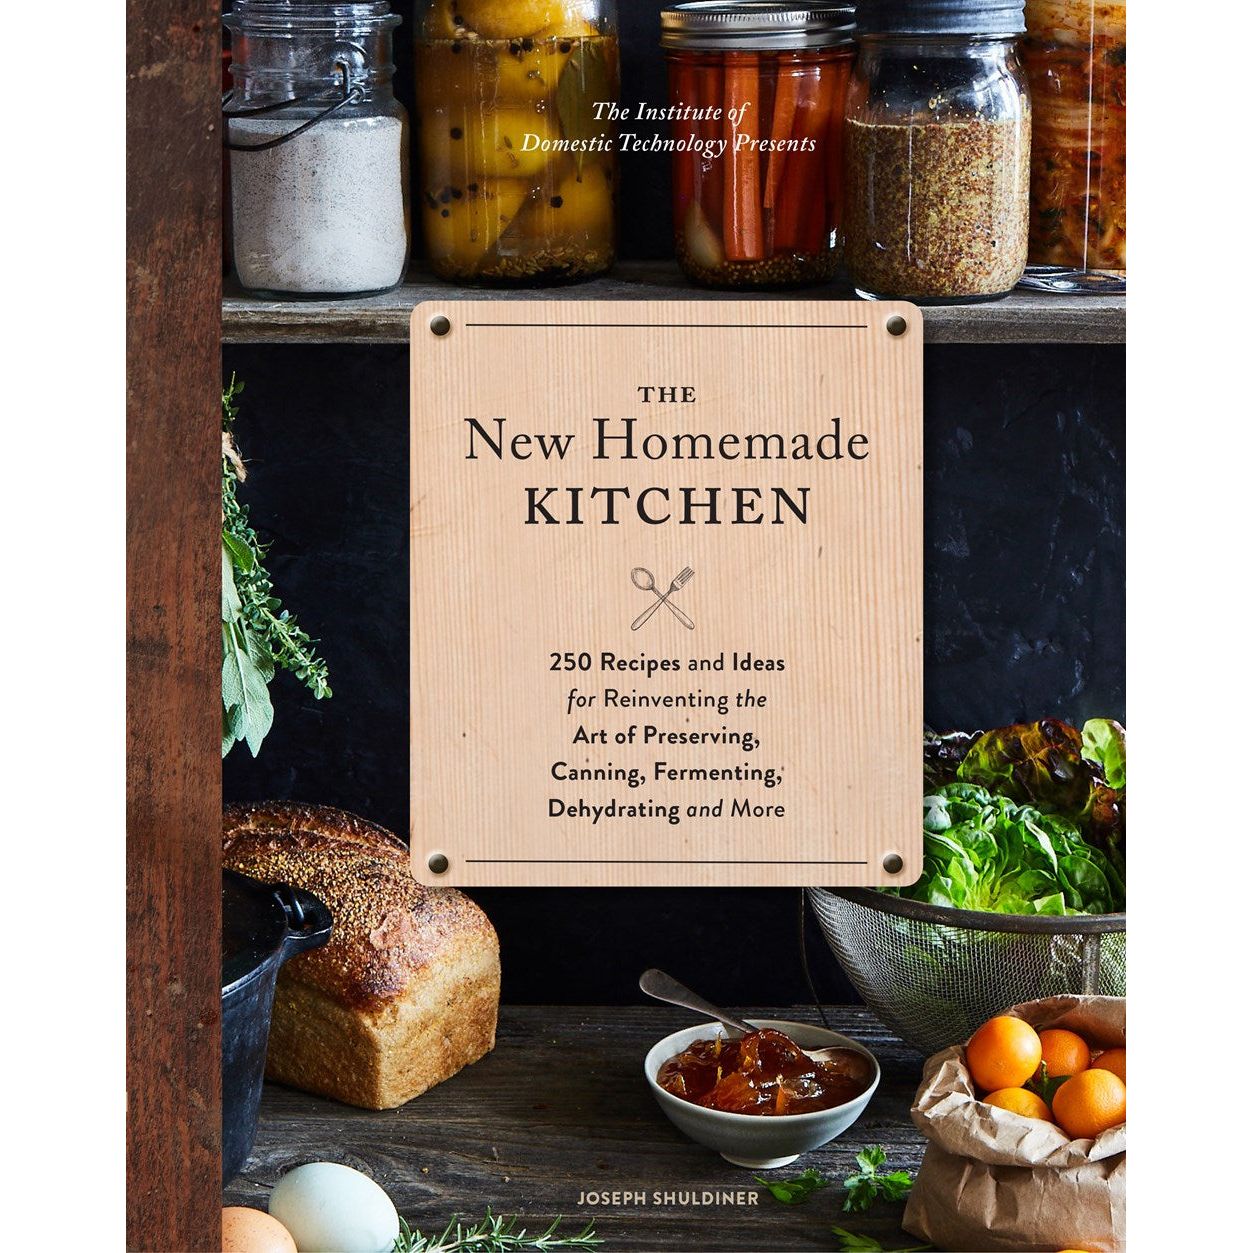 The New Homemade Kitchen (Joseph Shuldiner)